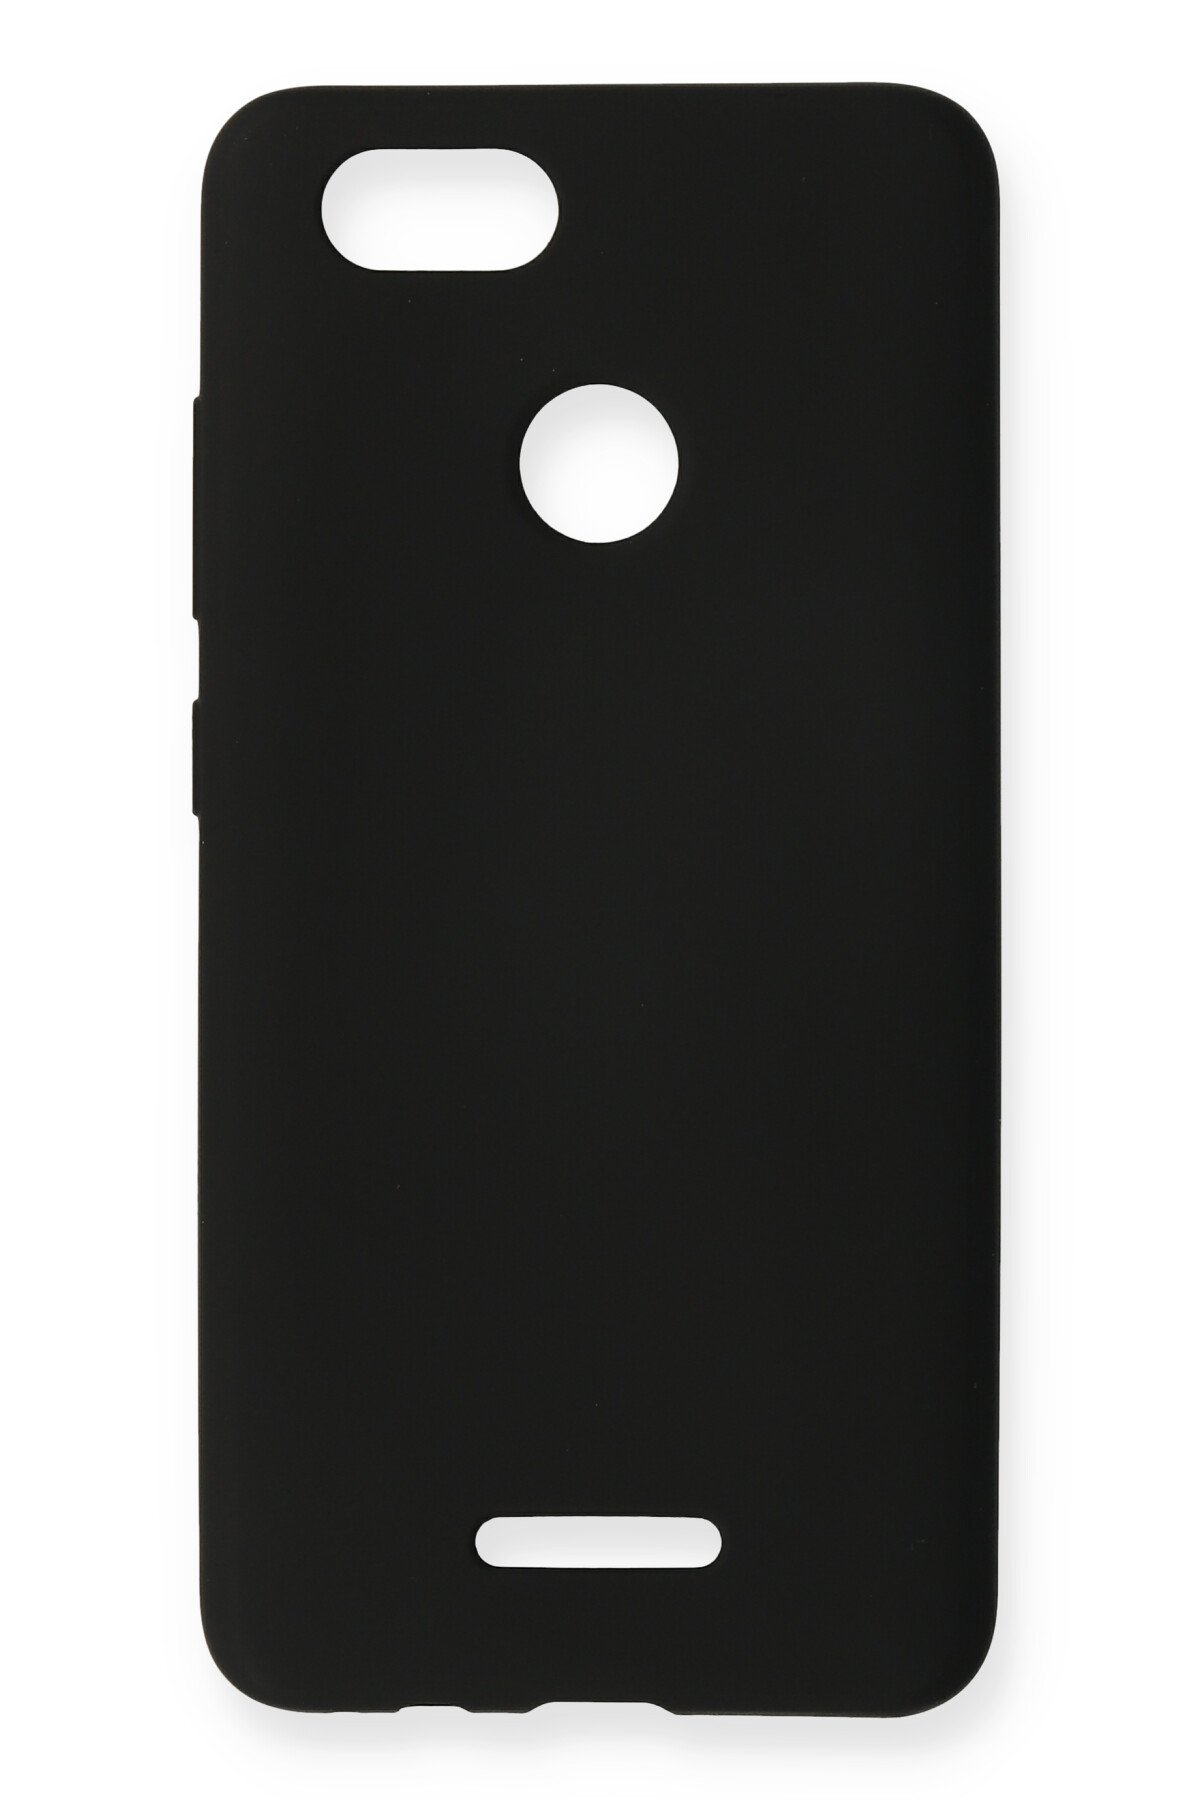 NewFace Newface Casper Via M4 Kılıf Premium Rubber Silikon - Siyah